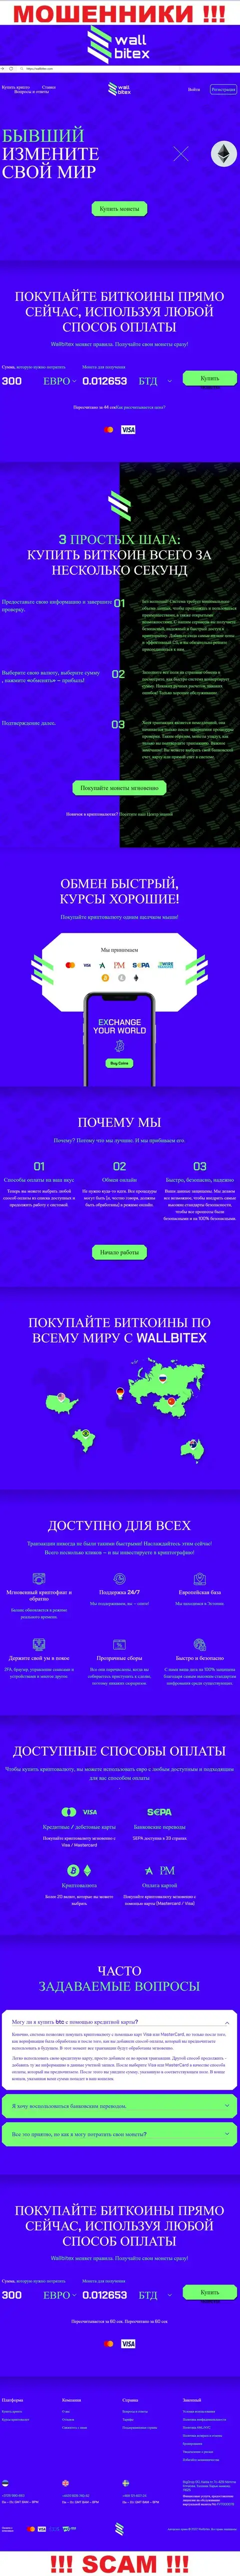 WallBitex Com - это web-сервис преступно действующей компании WallBitex